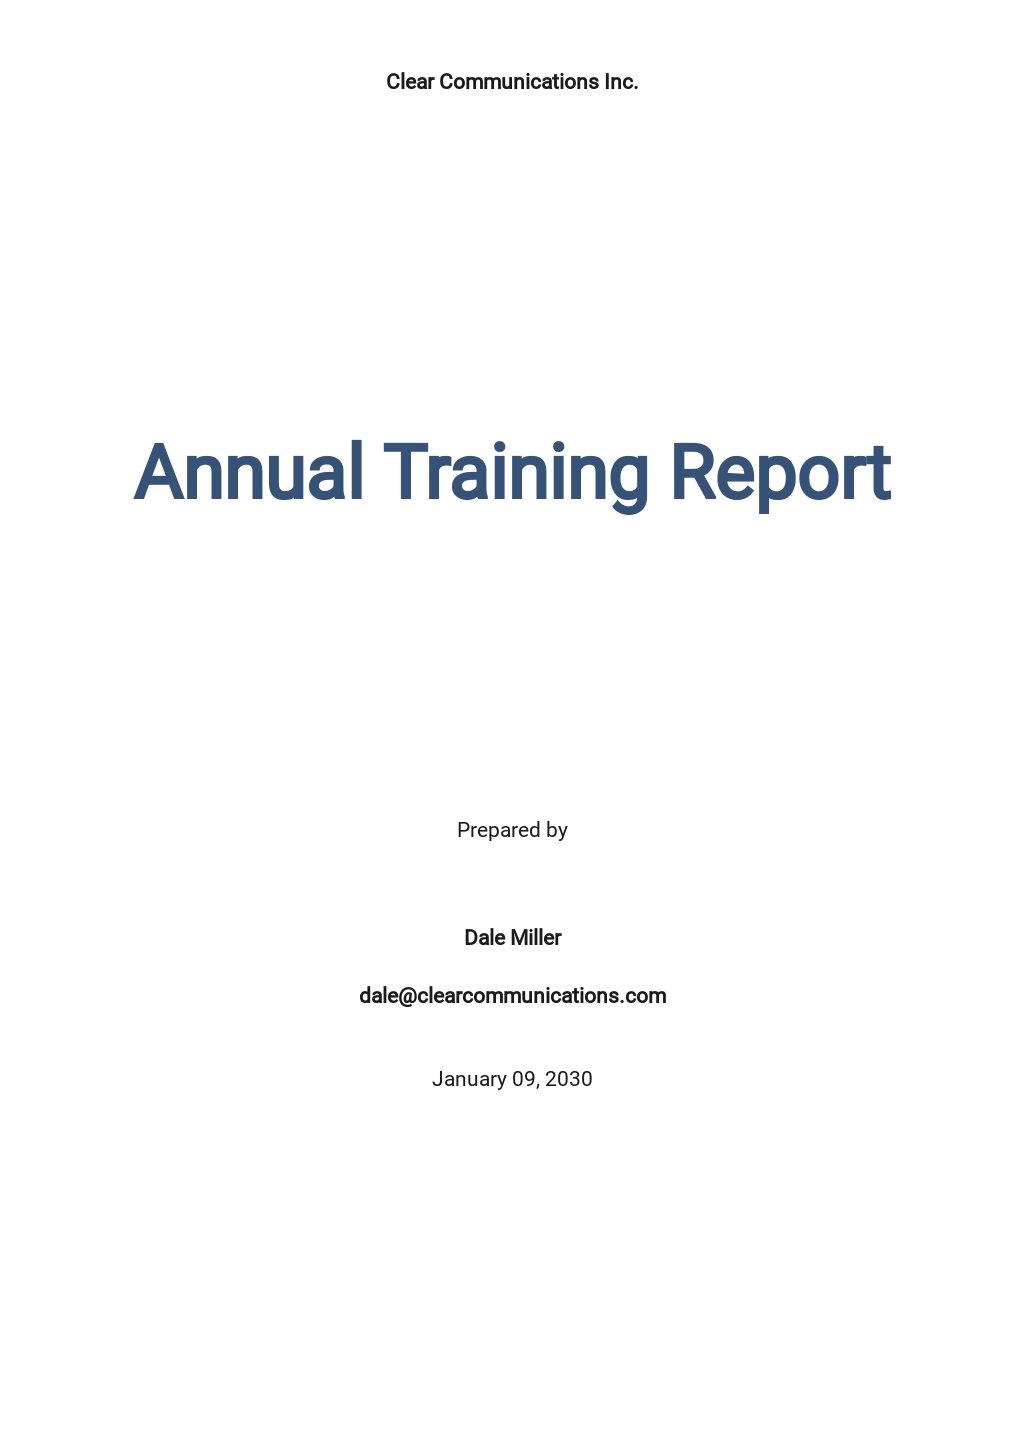 Annual Training Report Template.jpe